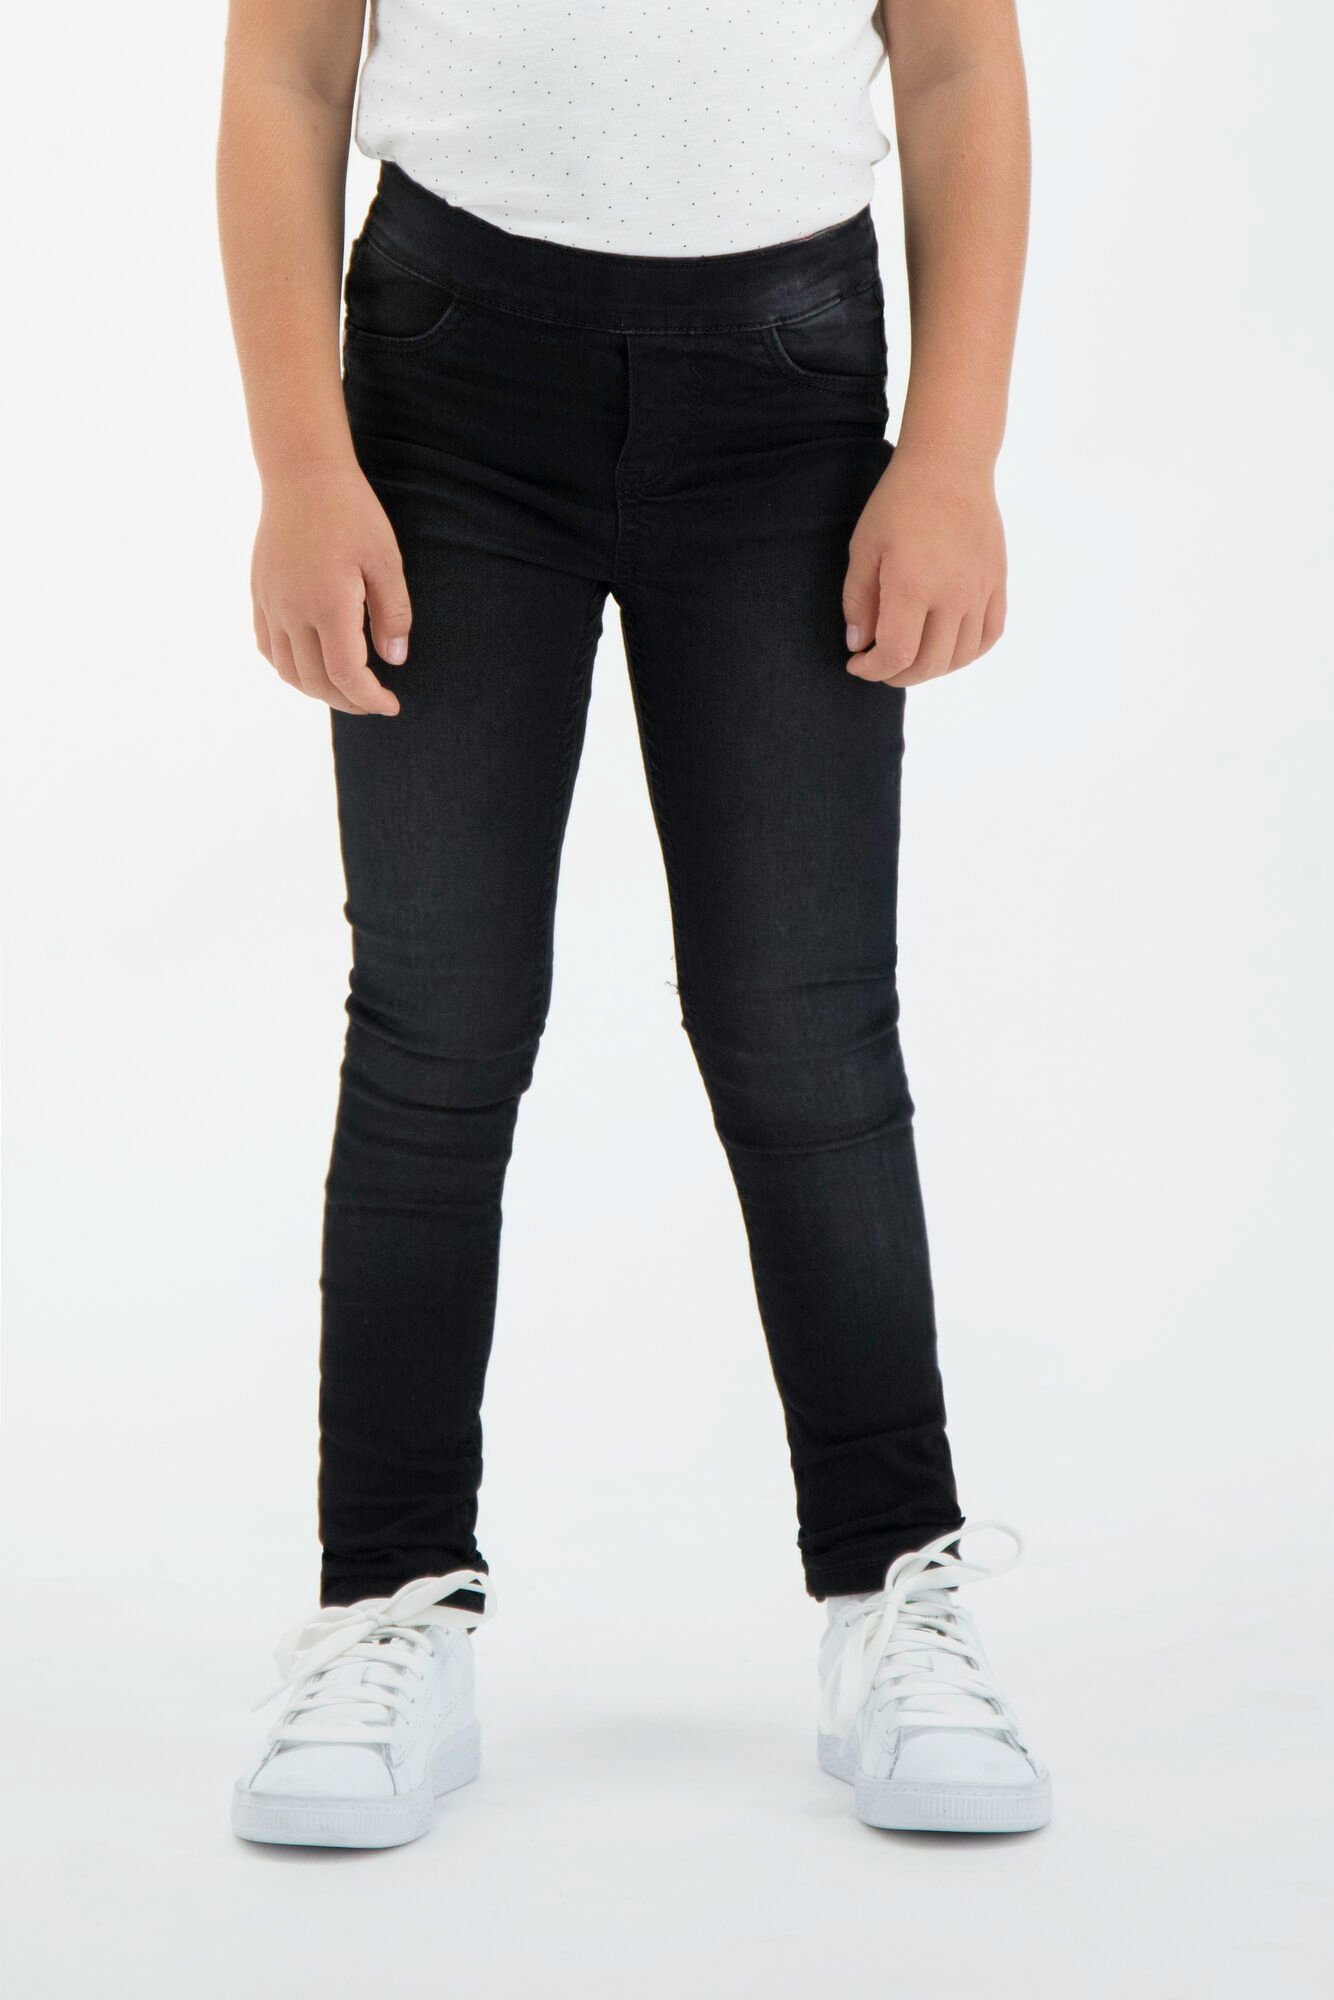 JEANS 5-Pocket-Jeans GARCIA